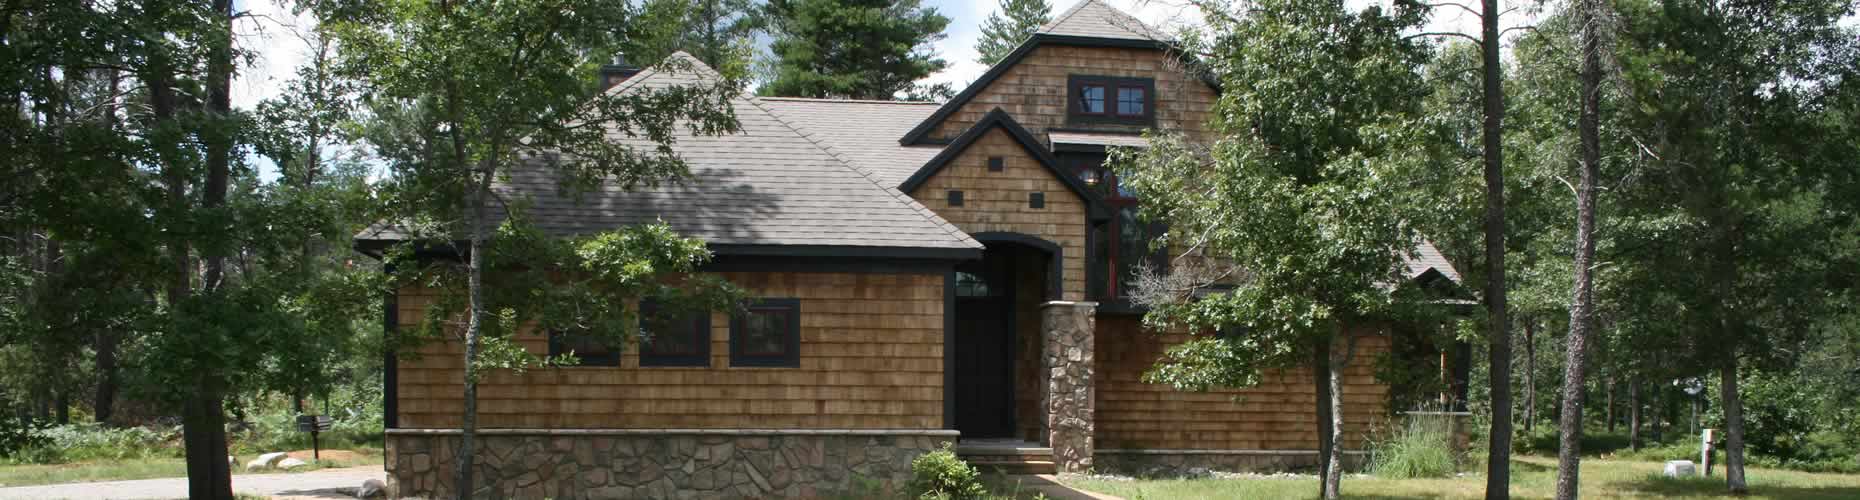 pines cottage header